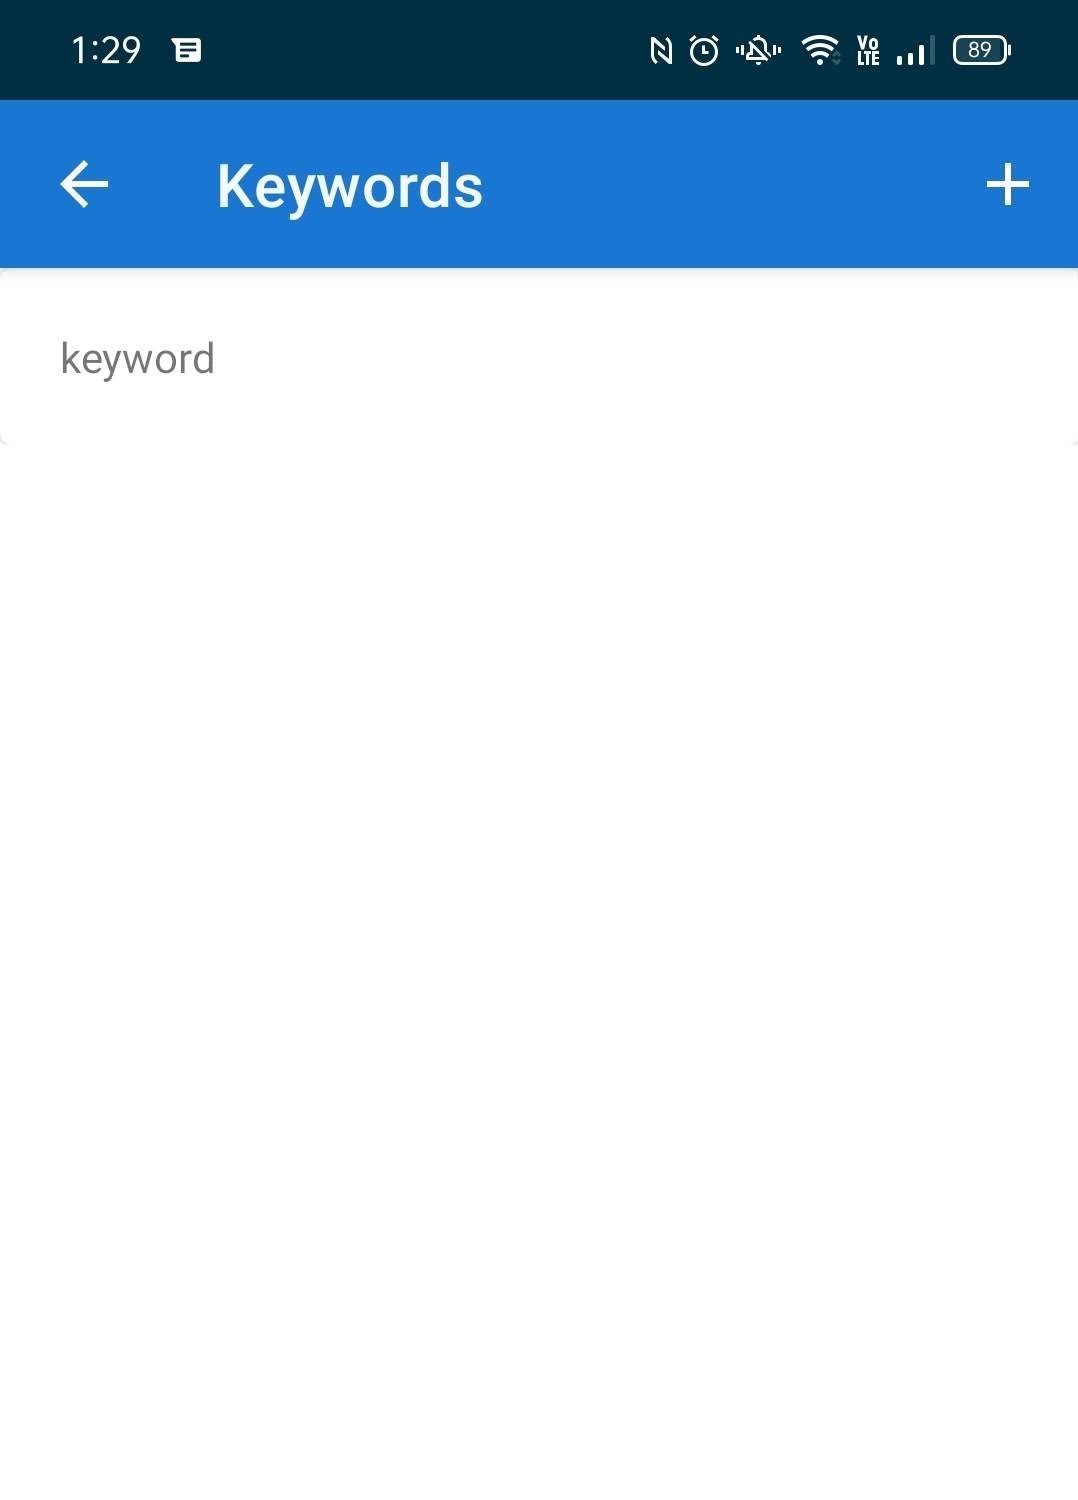 Screenshot of Safe Surfer Android app, showing a custom keyword